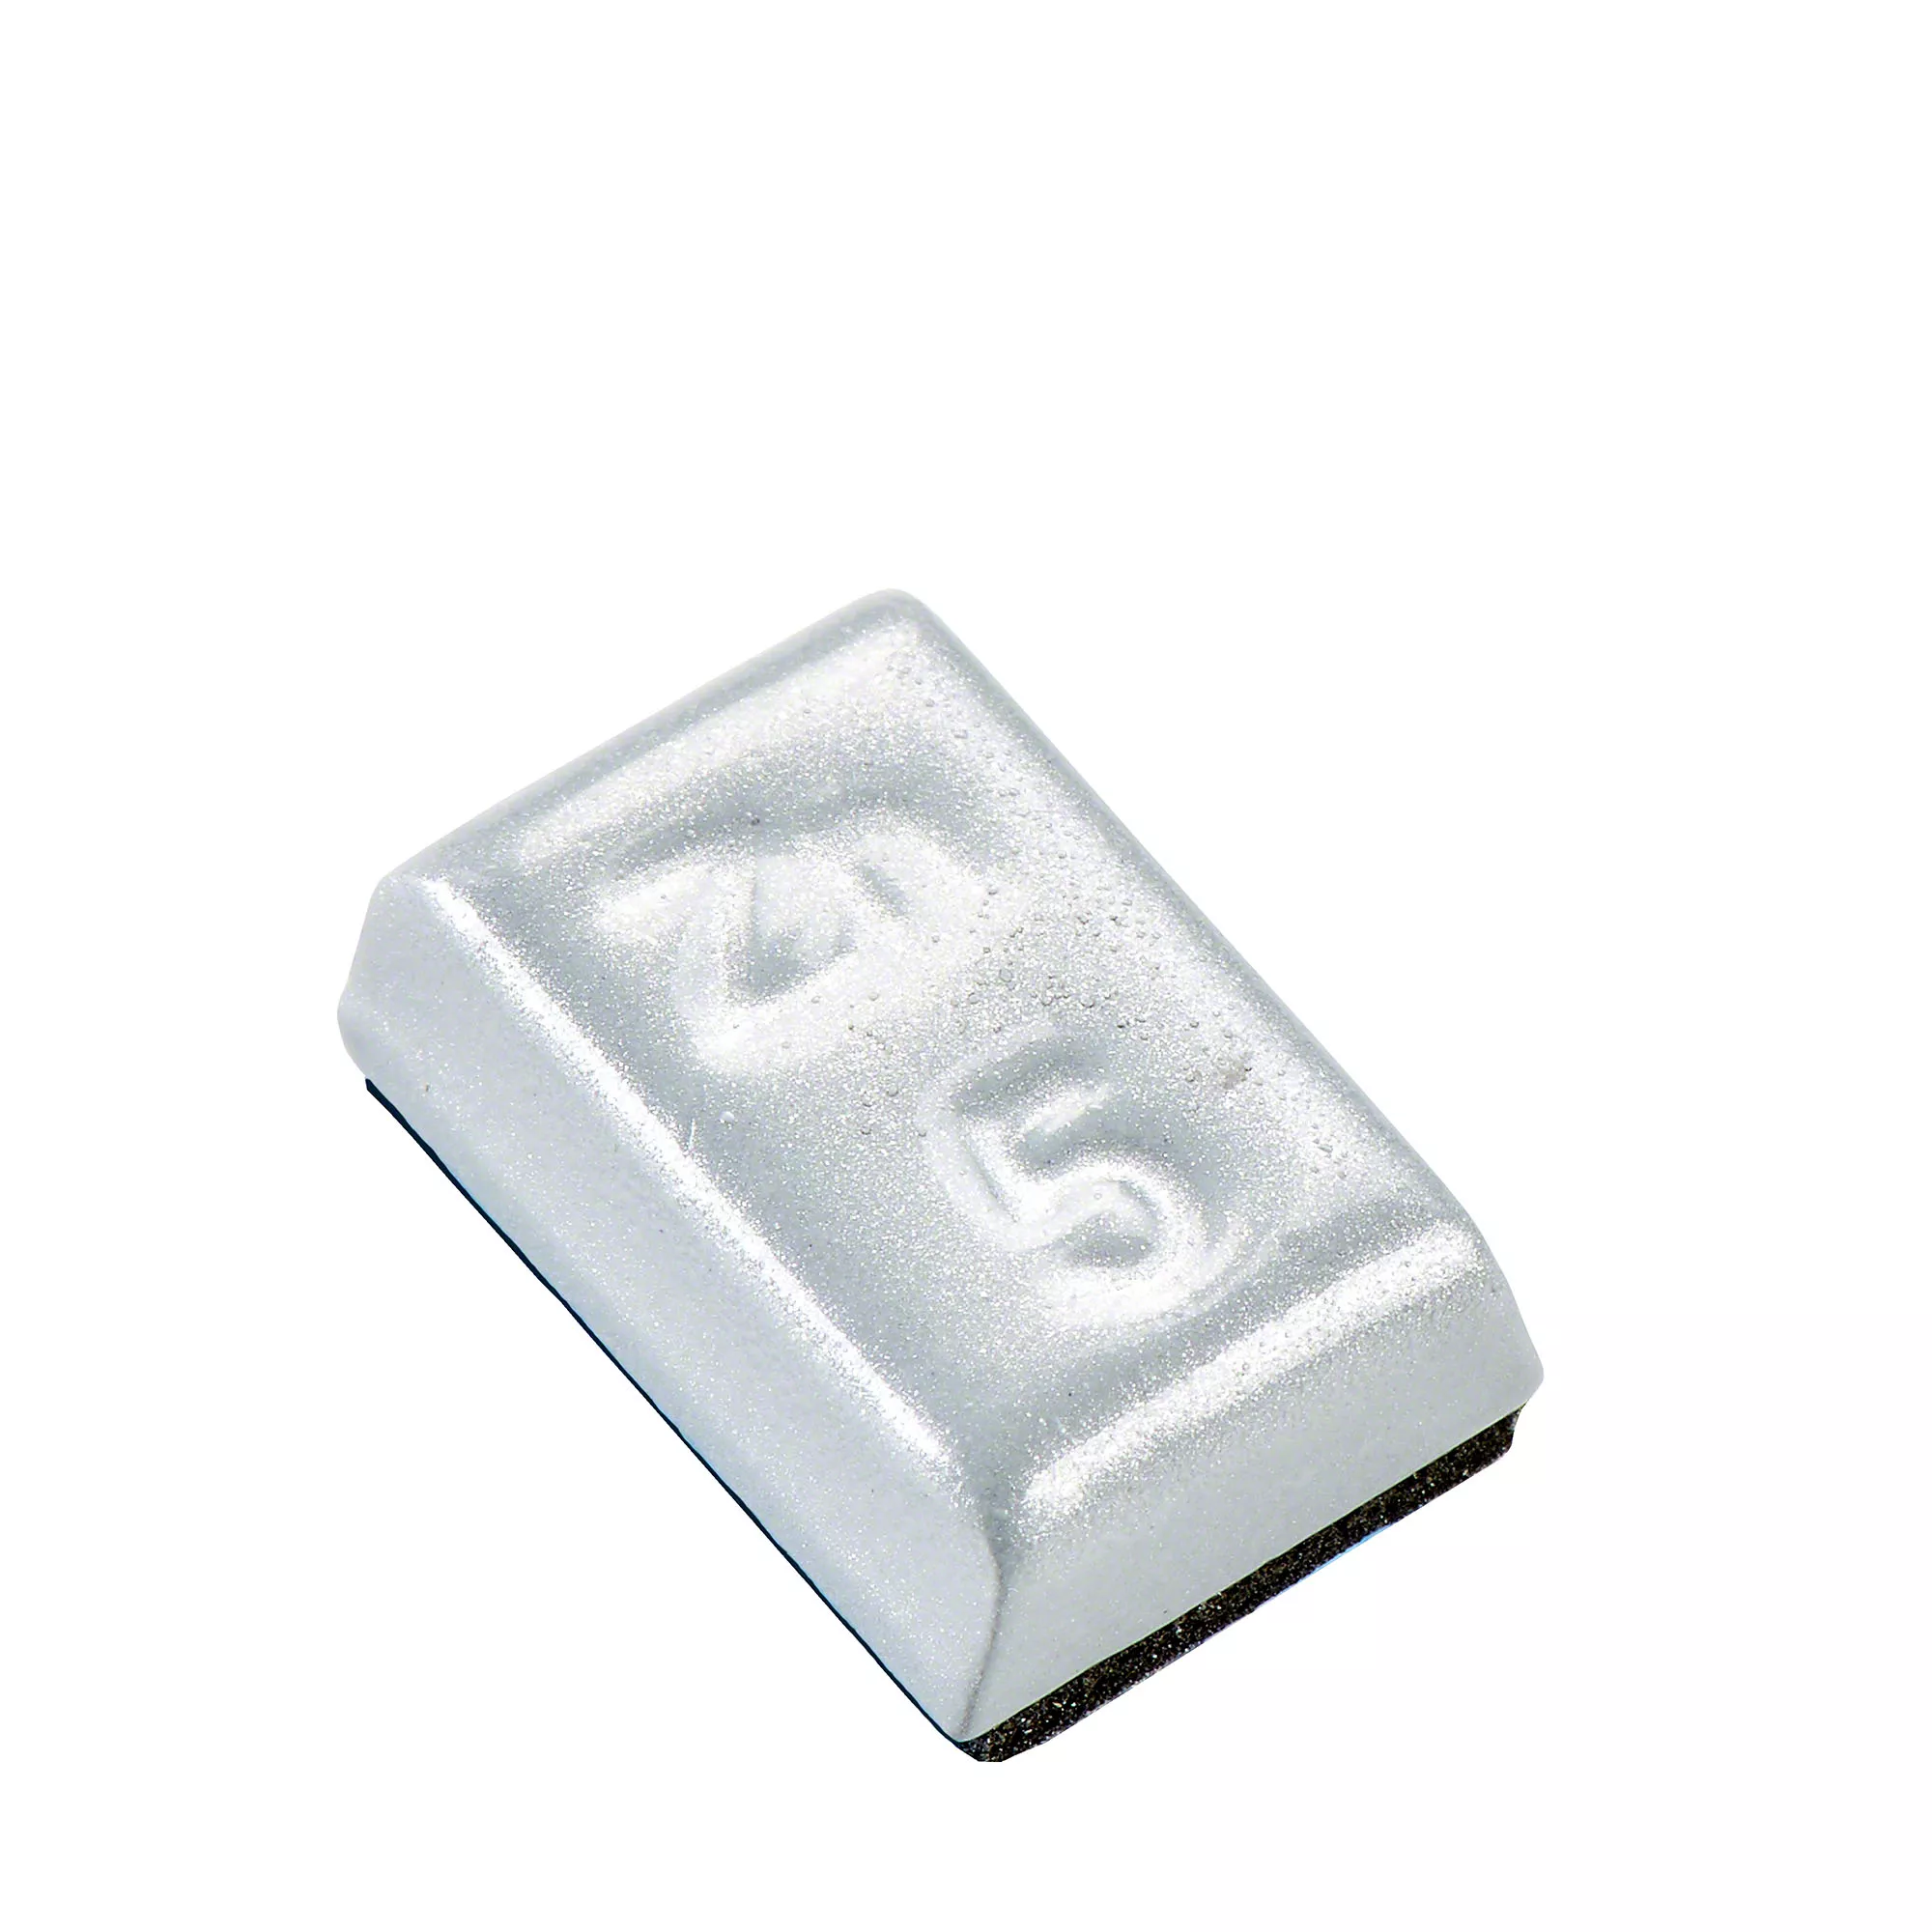 contrapesa adhesiva - Typ 799, 5 g, zinc, plata